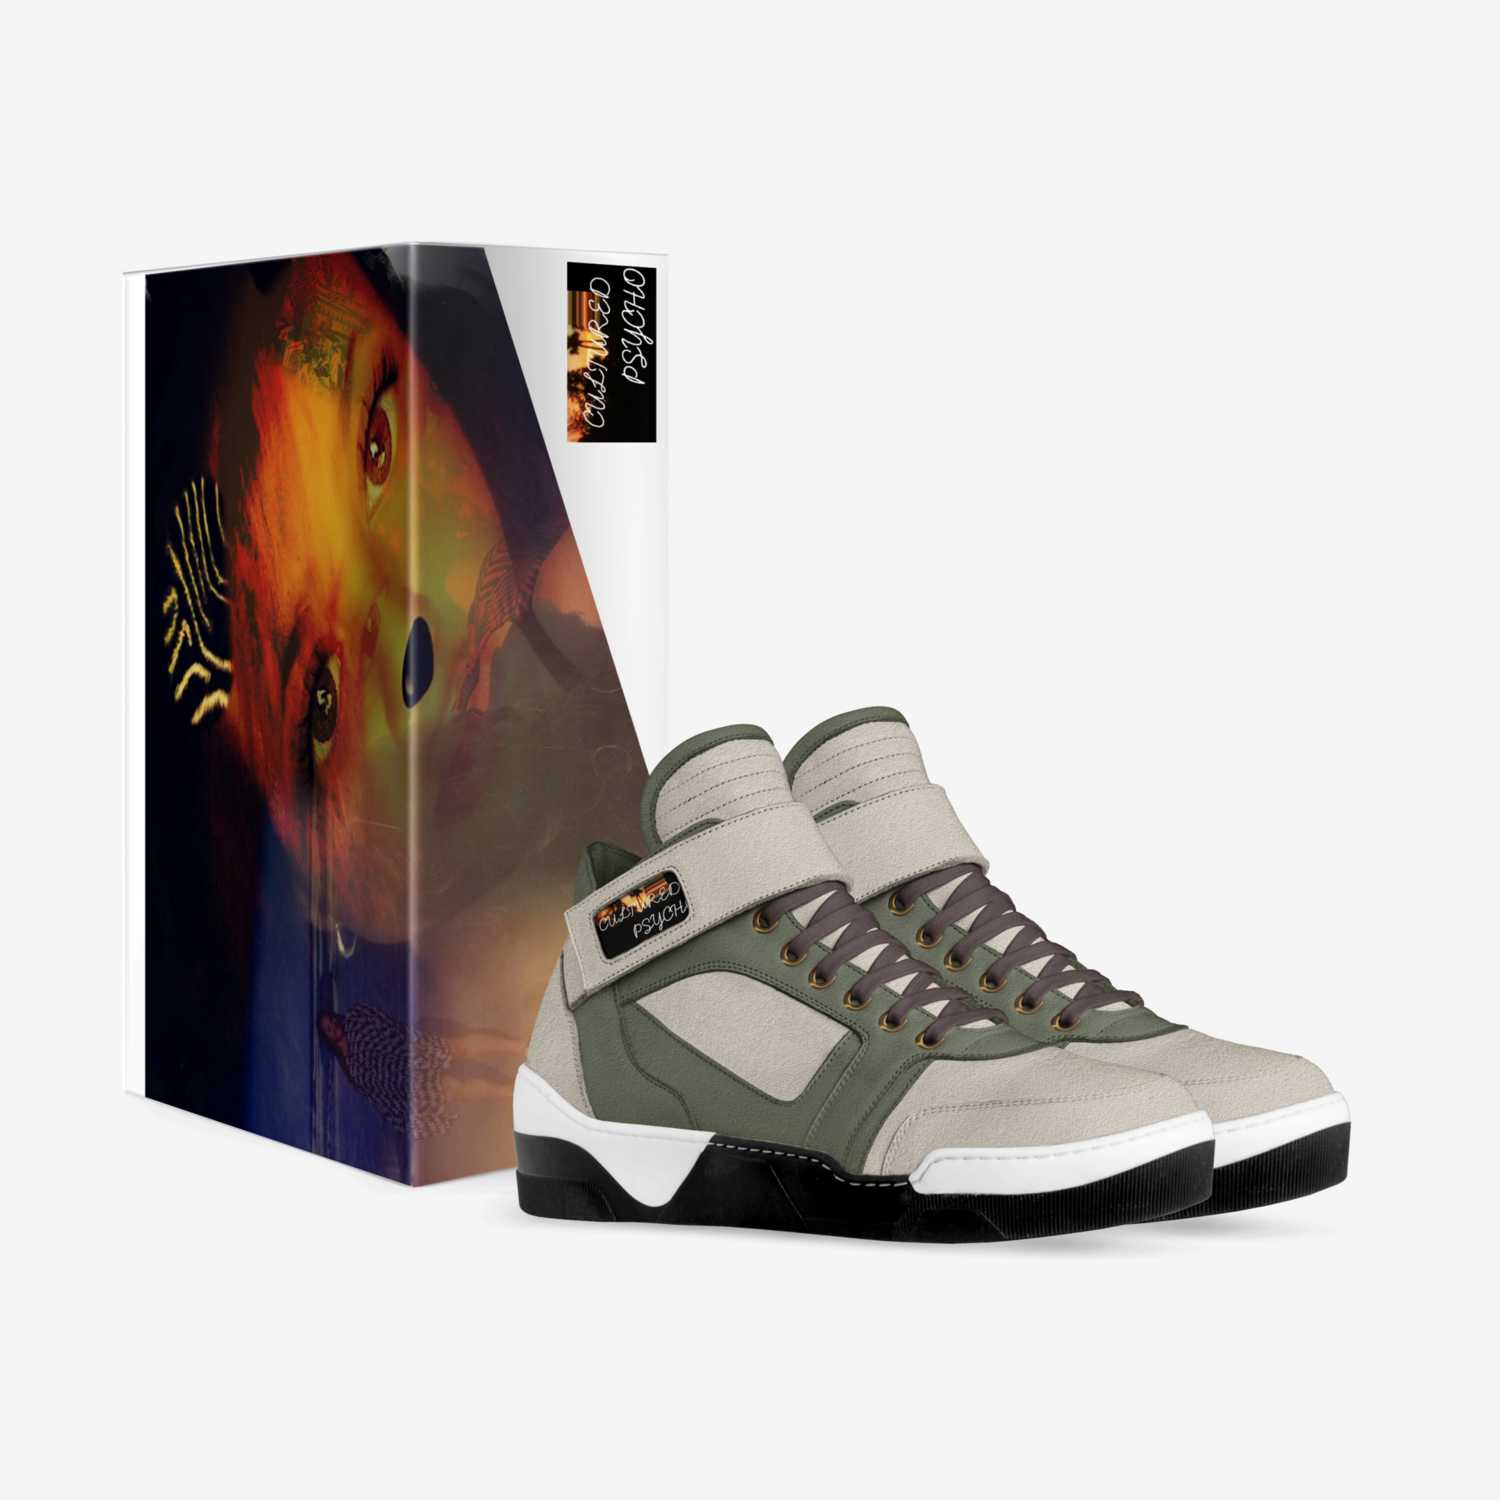 CulturedPsycho custom made in Italy shoes by Aroosha Tabb | Box view